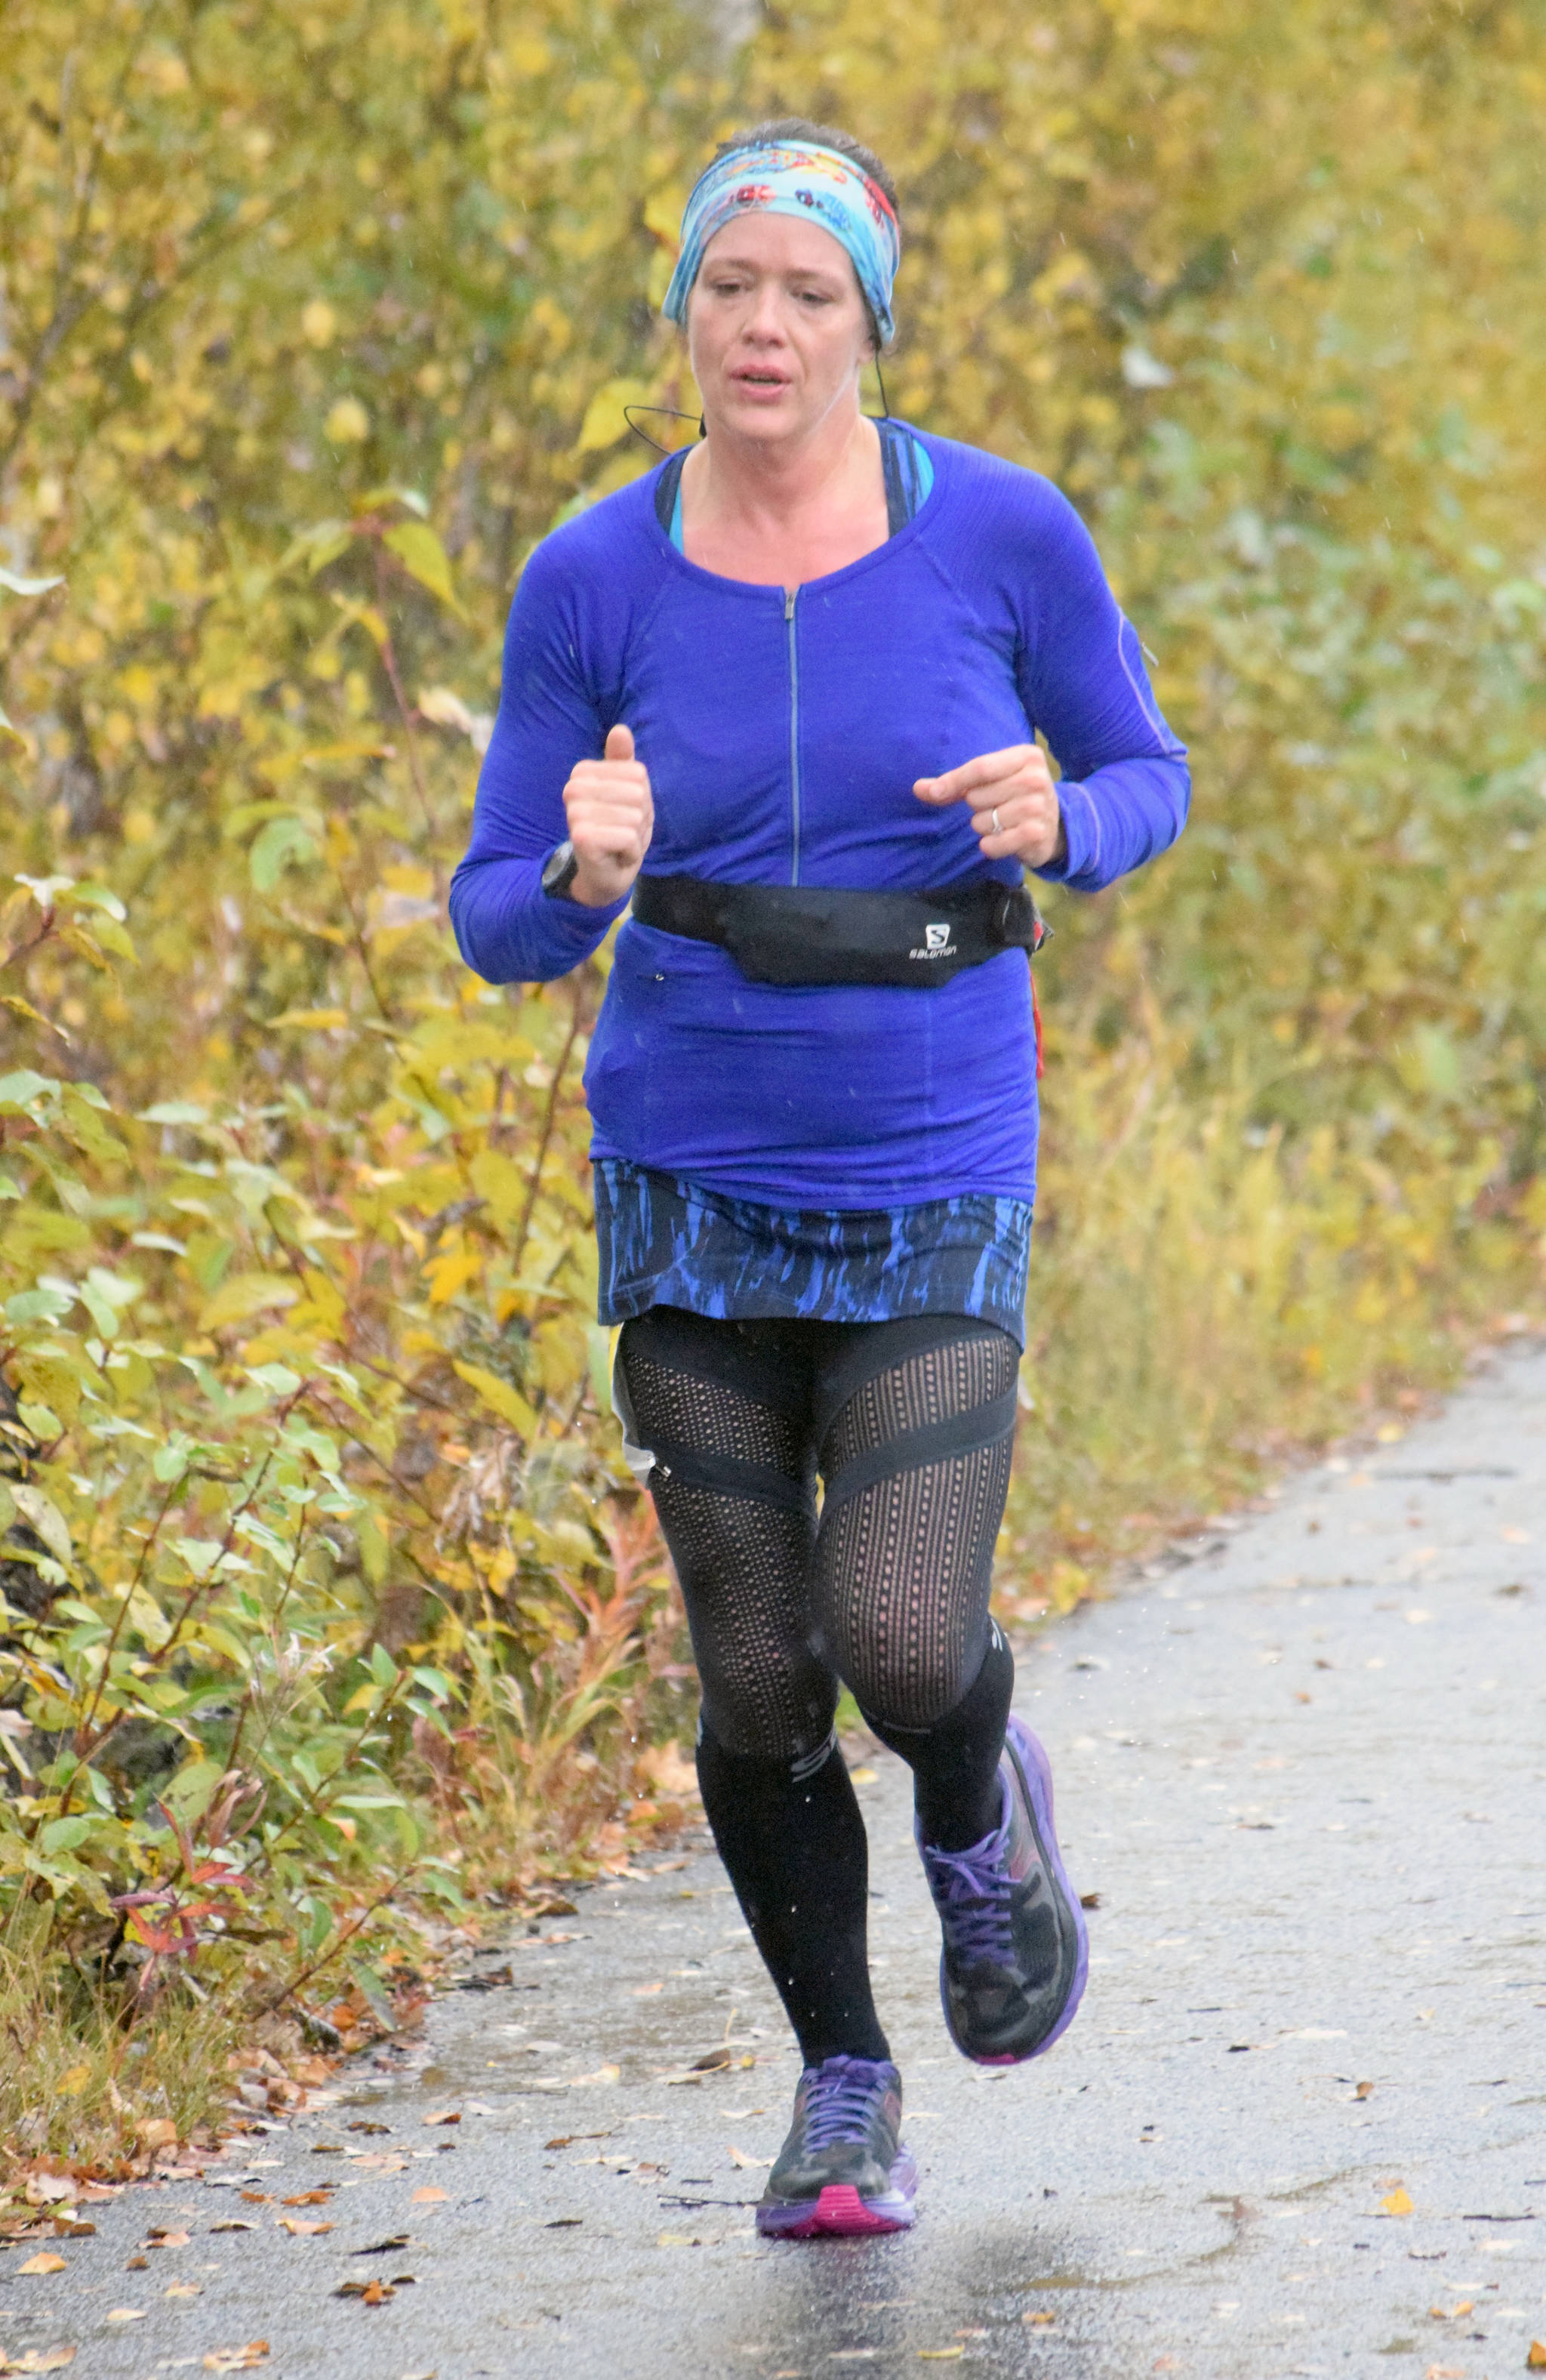 Kristen Buckwalter of Homer runs to victory in the Half Marathon at the Kenai River Marathon on Sunday, Sept. 29, 2019, in Alaska. (Photo by Jeff Helminiak/Peninsula Clarion)